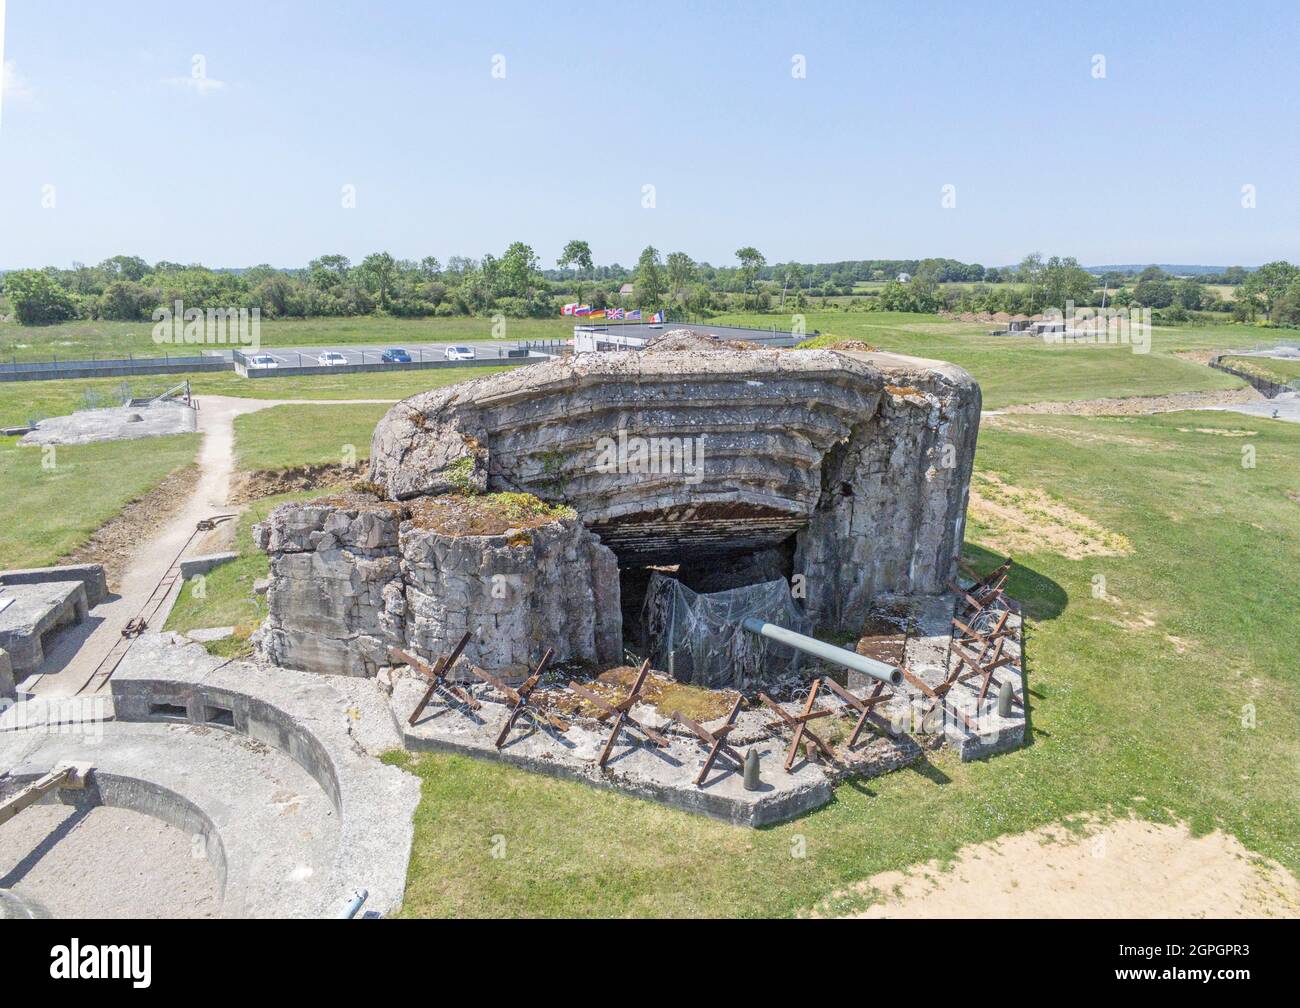 France, Manche, Saint Marcouf, Crisbecq battery, Atlantic Wall german  coastal batteries, bunker with its 210mm gun Skoda (aerial view Stock Photo  - Alamy